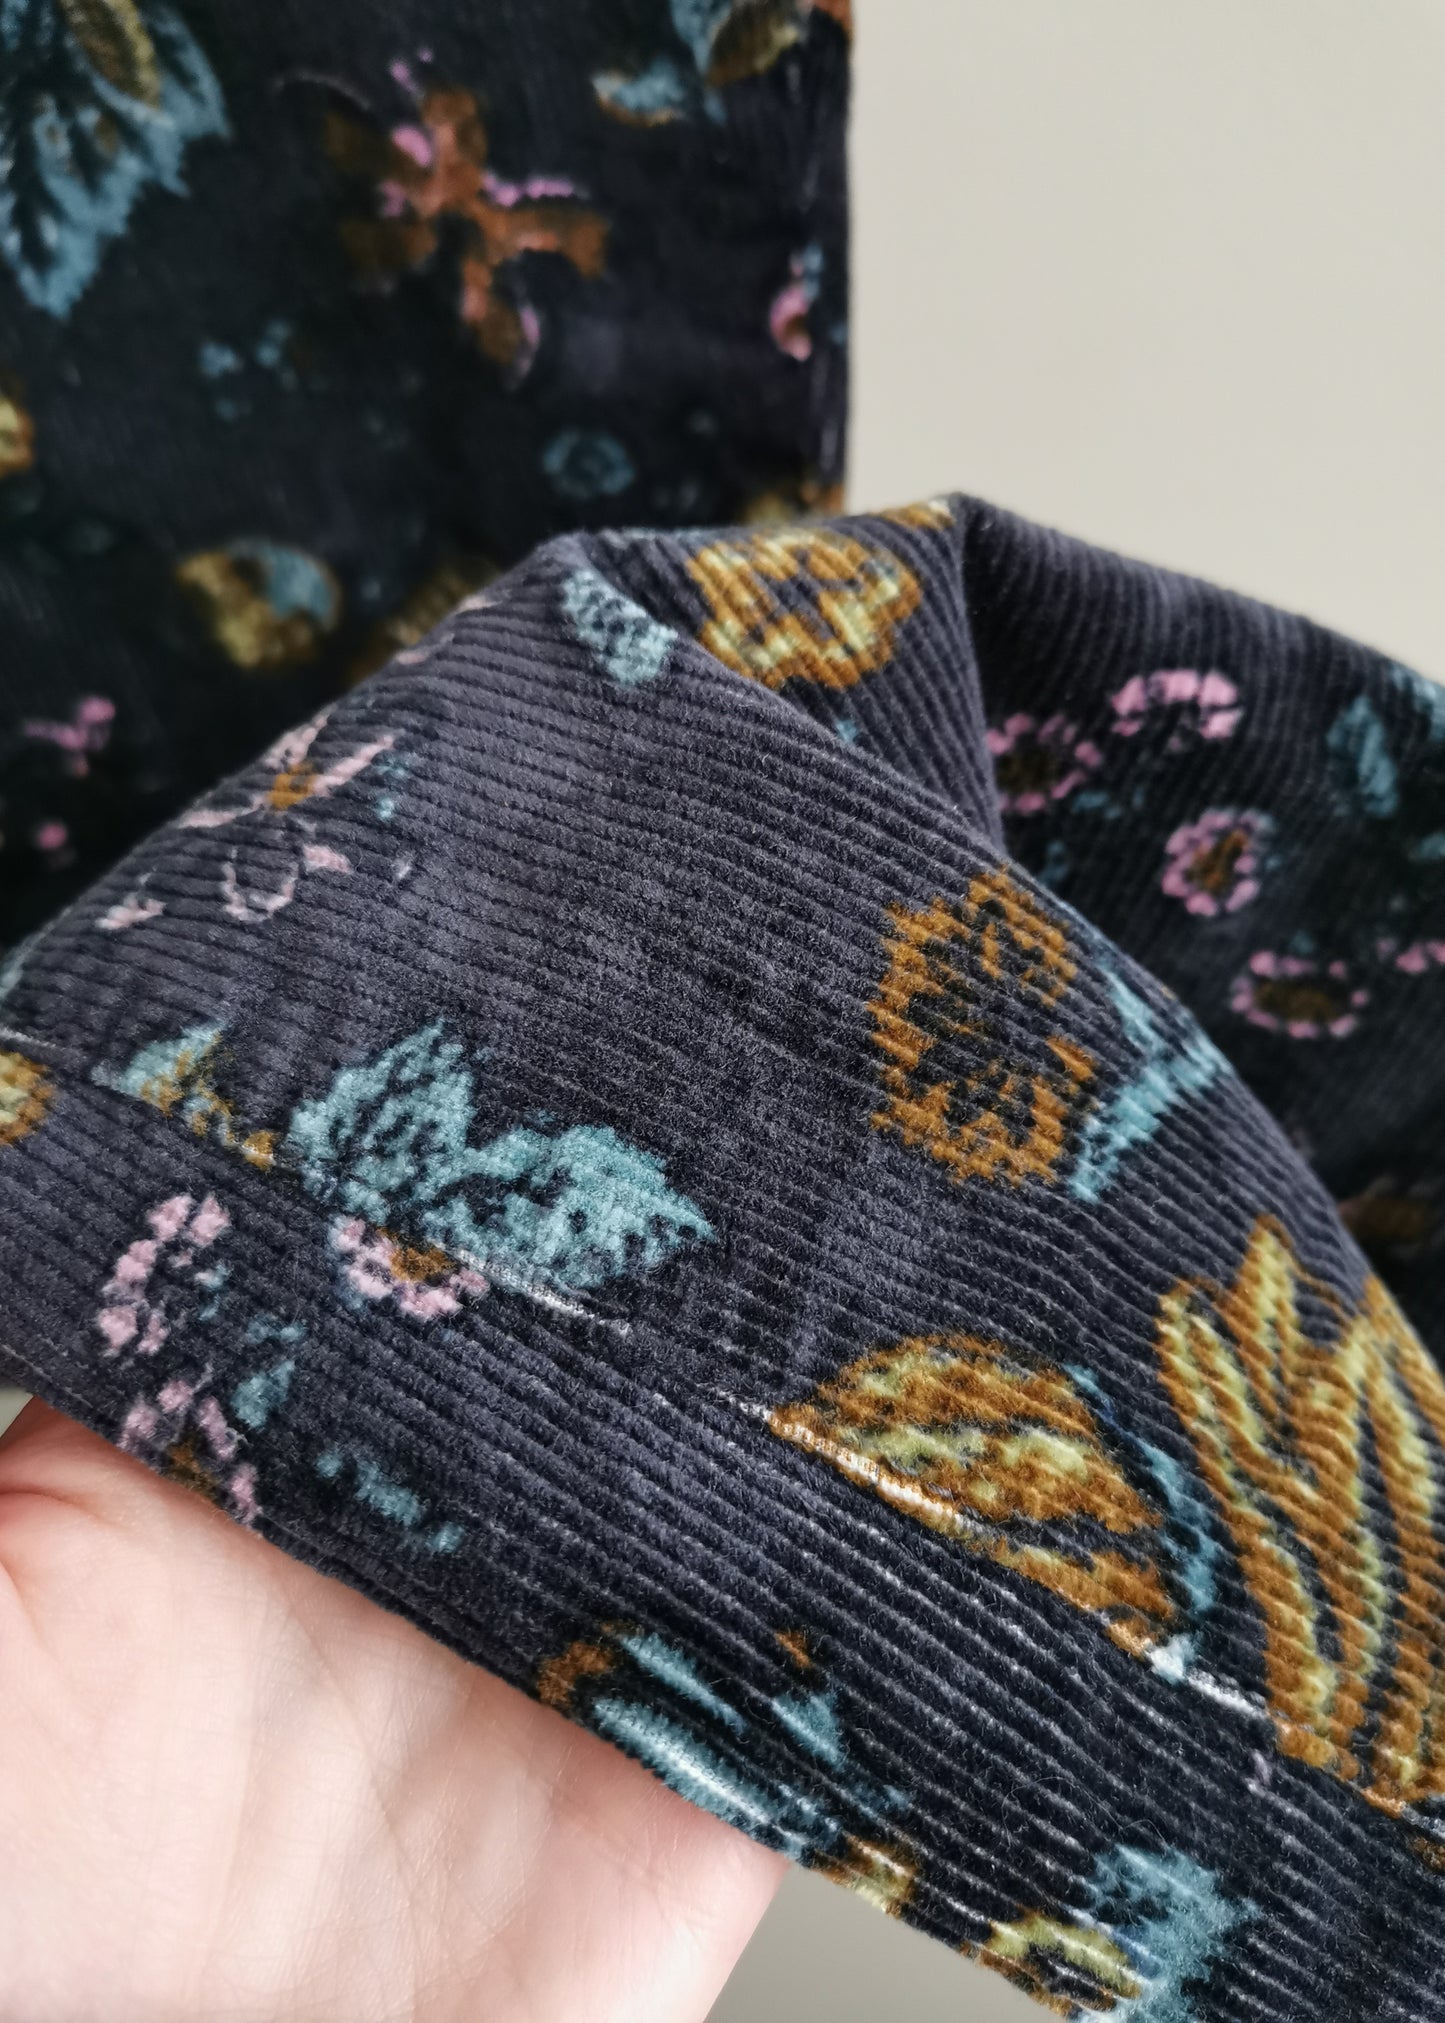 Anthropologie | Pilcro Cotton & Modal Icon Flare Corduroy Floral Pants (31)